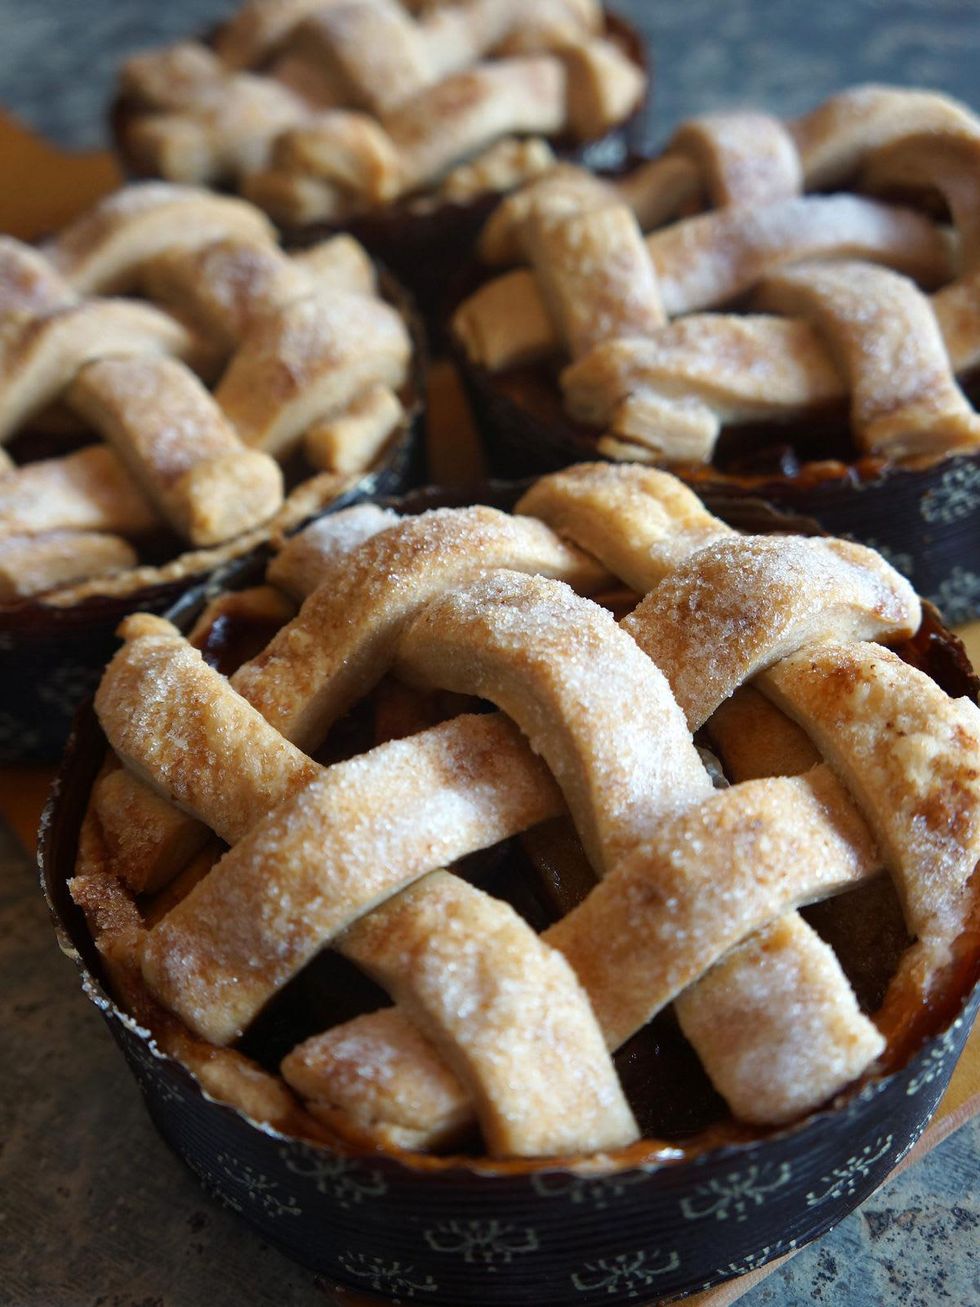 Apple Pies at Triniti by pastry chef Samantha Mendoza